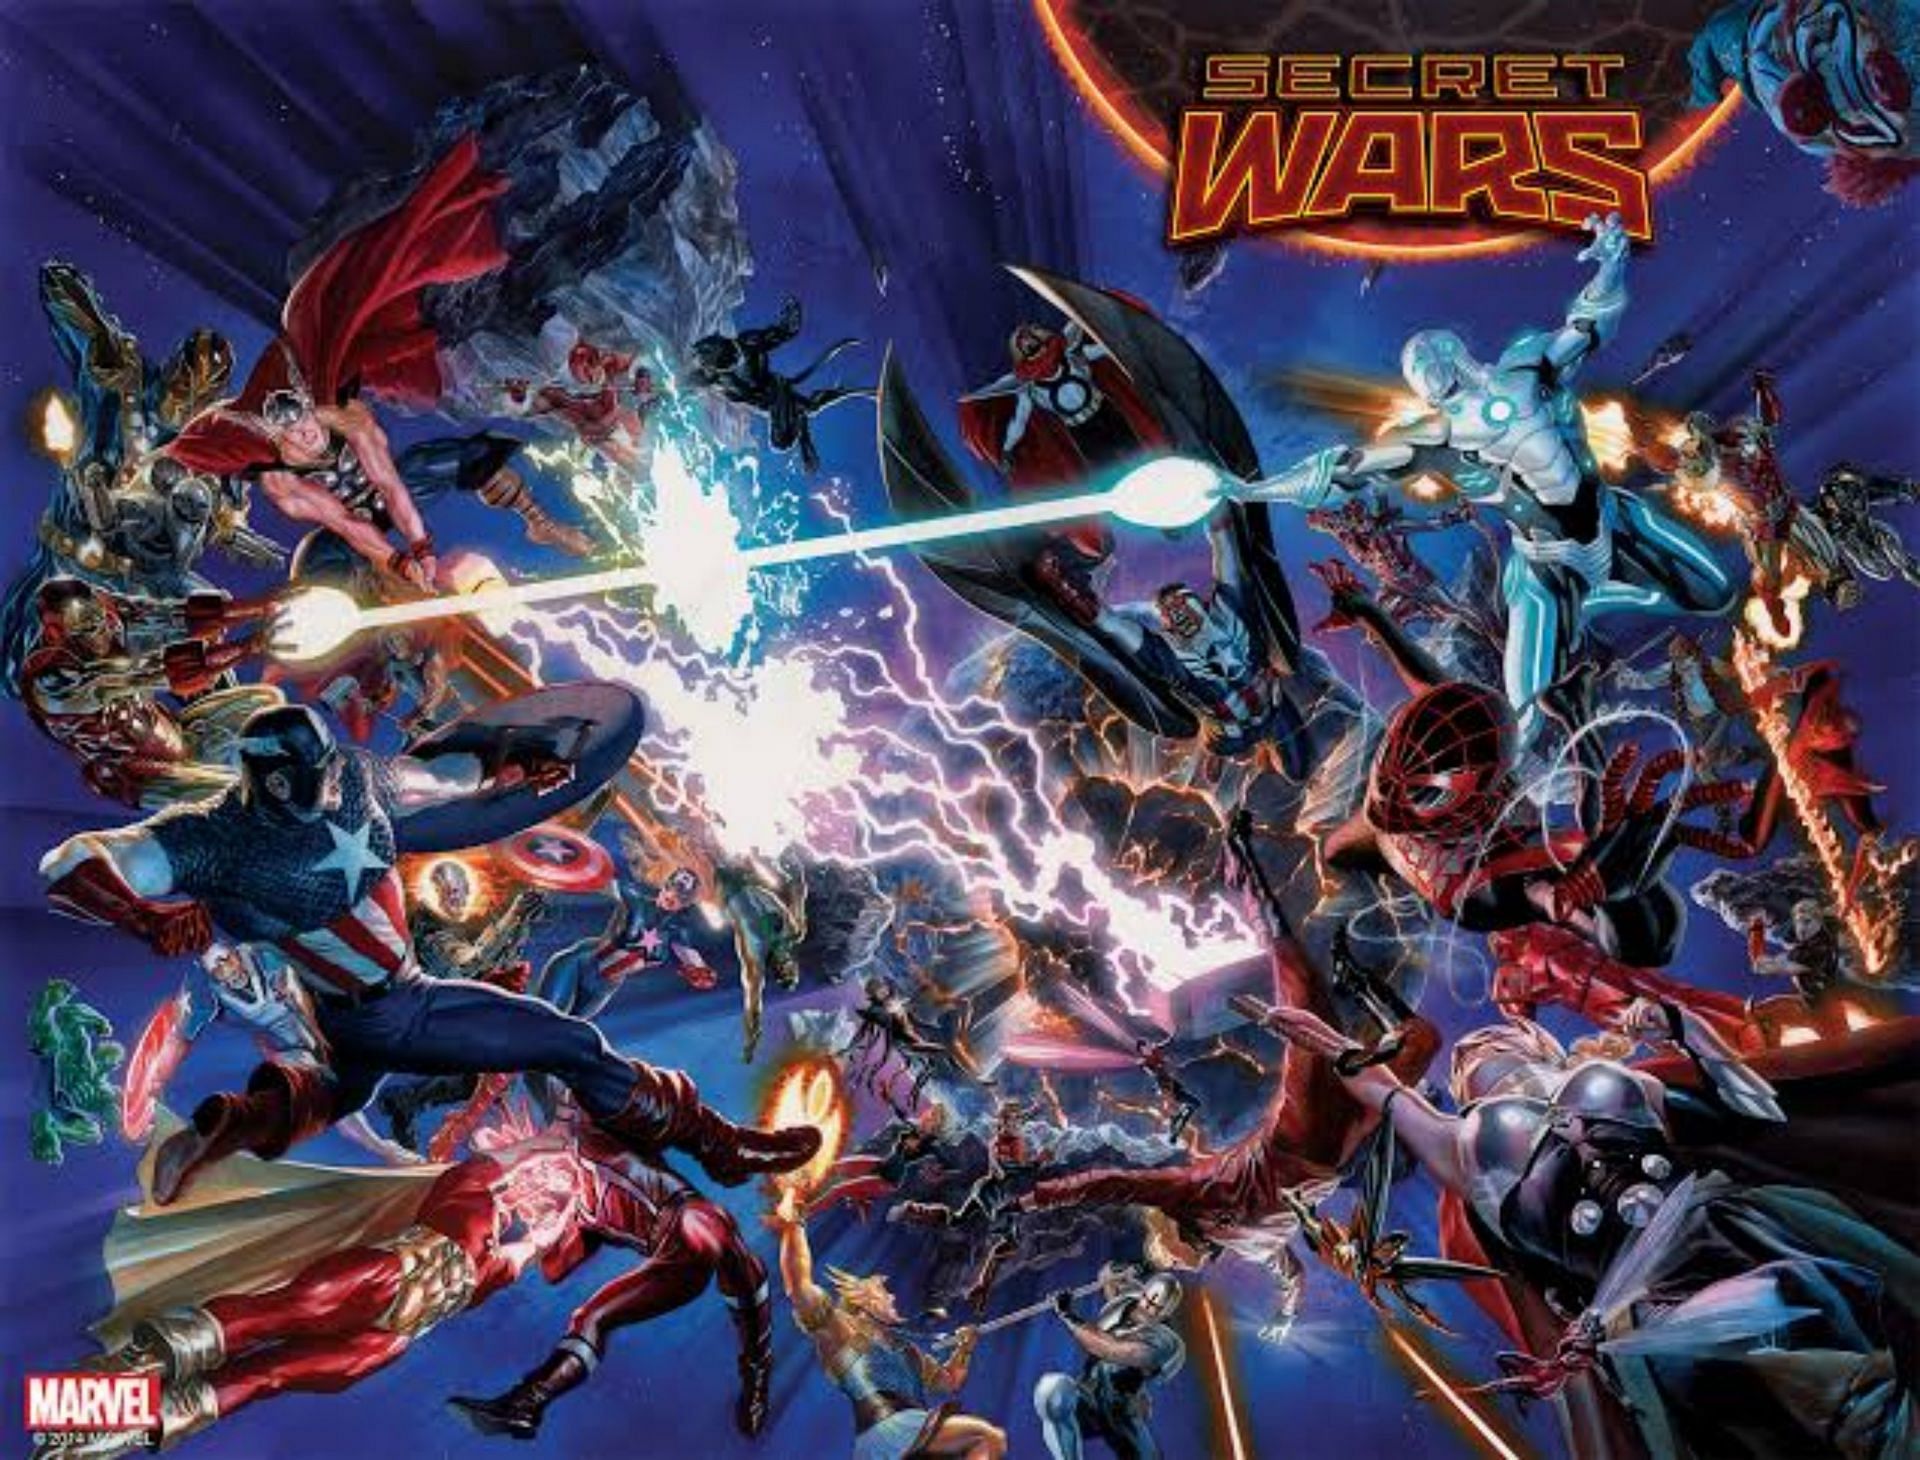 The cover for Secret Wars 2015 (Image via Marvel Comics)